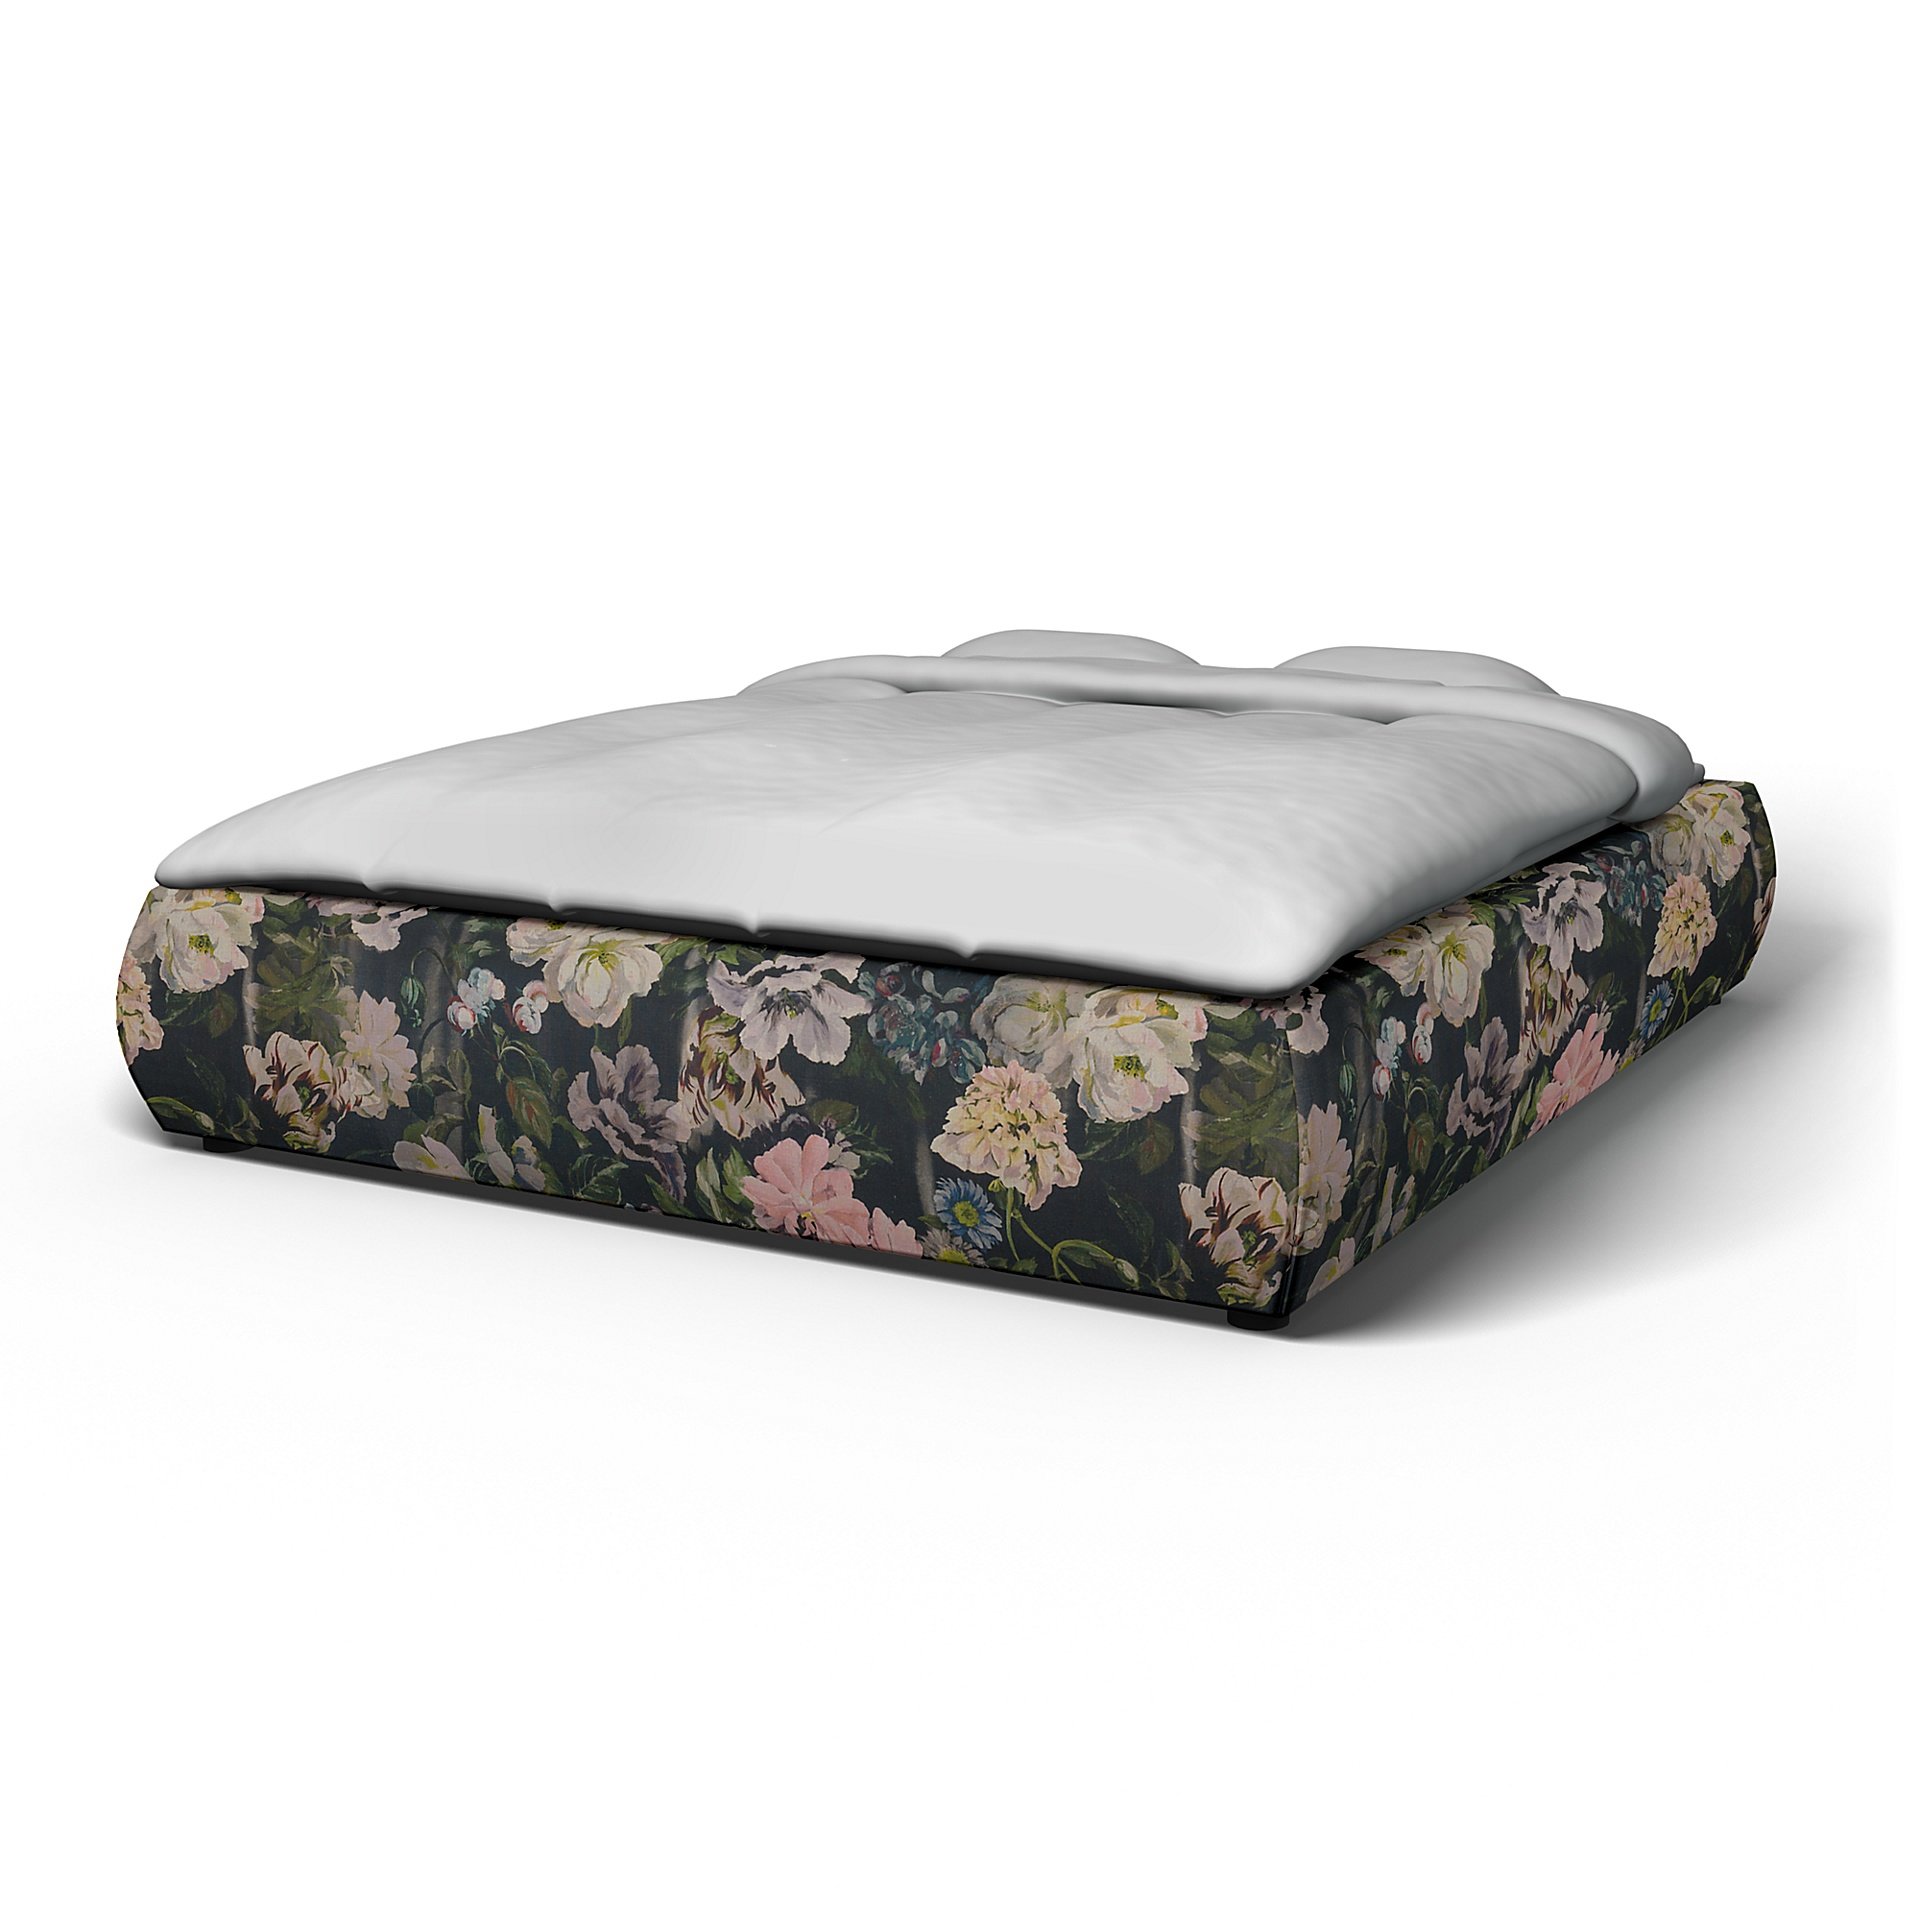 IKEA - Grimen Bed Frame Cover, Delft Flower - Graphite, Linen - Bemz